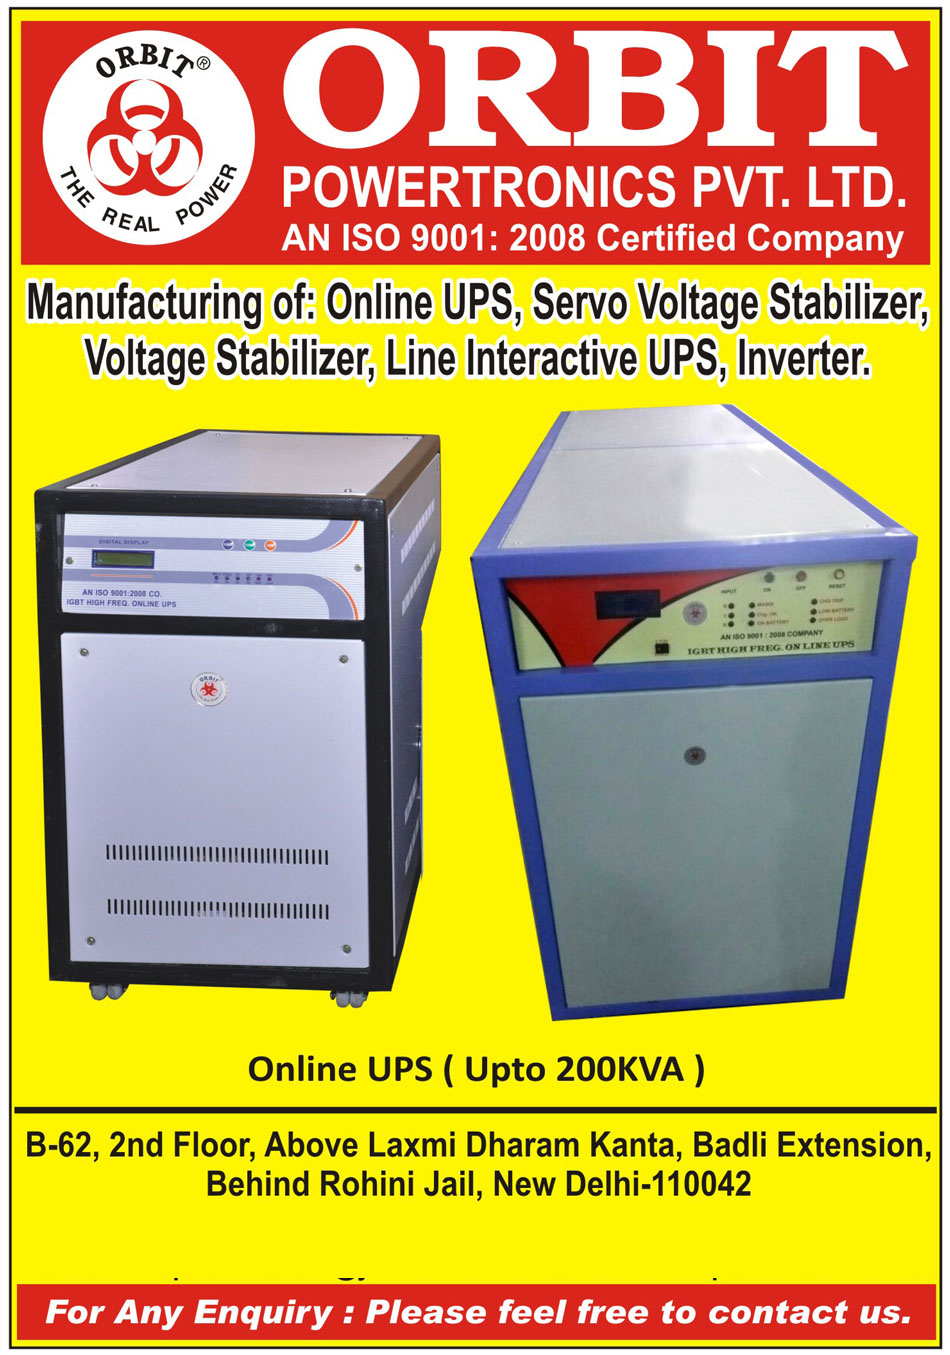 Online UPS, Servo Voltage Stabilizers, Voltage Stabilizers, Line Interactive UPS, Inverters